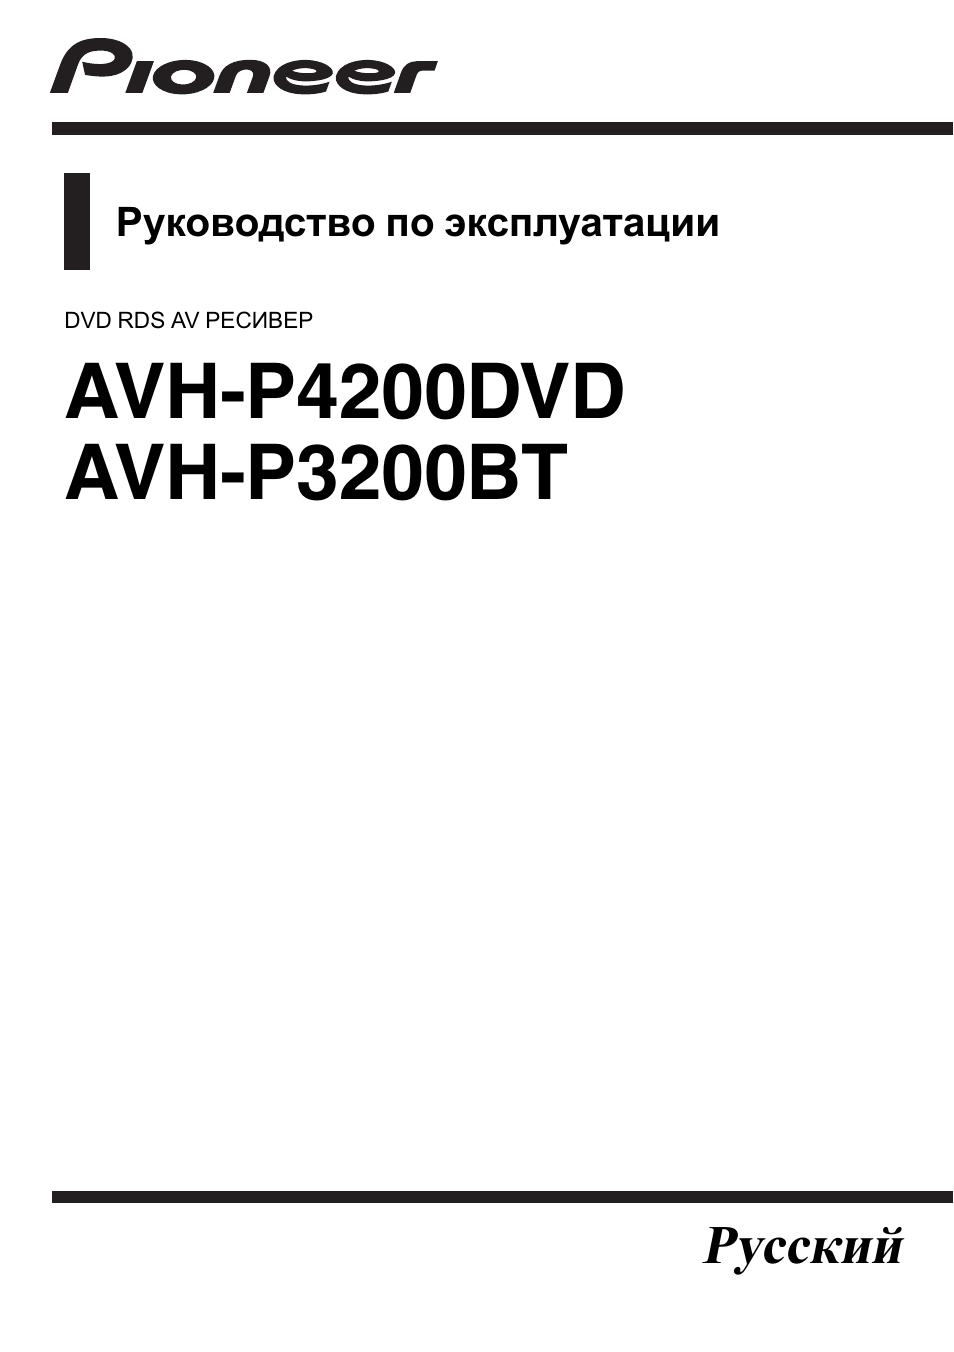 Инструкция по эксплуатации Pioneer AVH-P3200BT  RU | 116 страниц